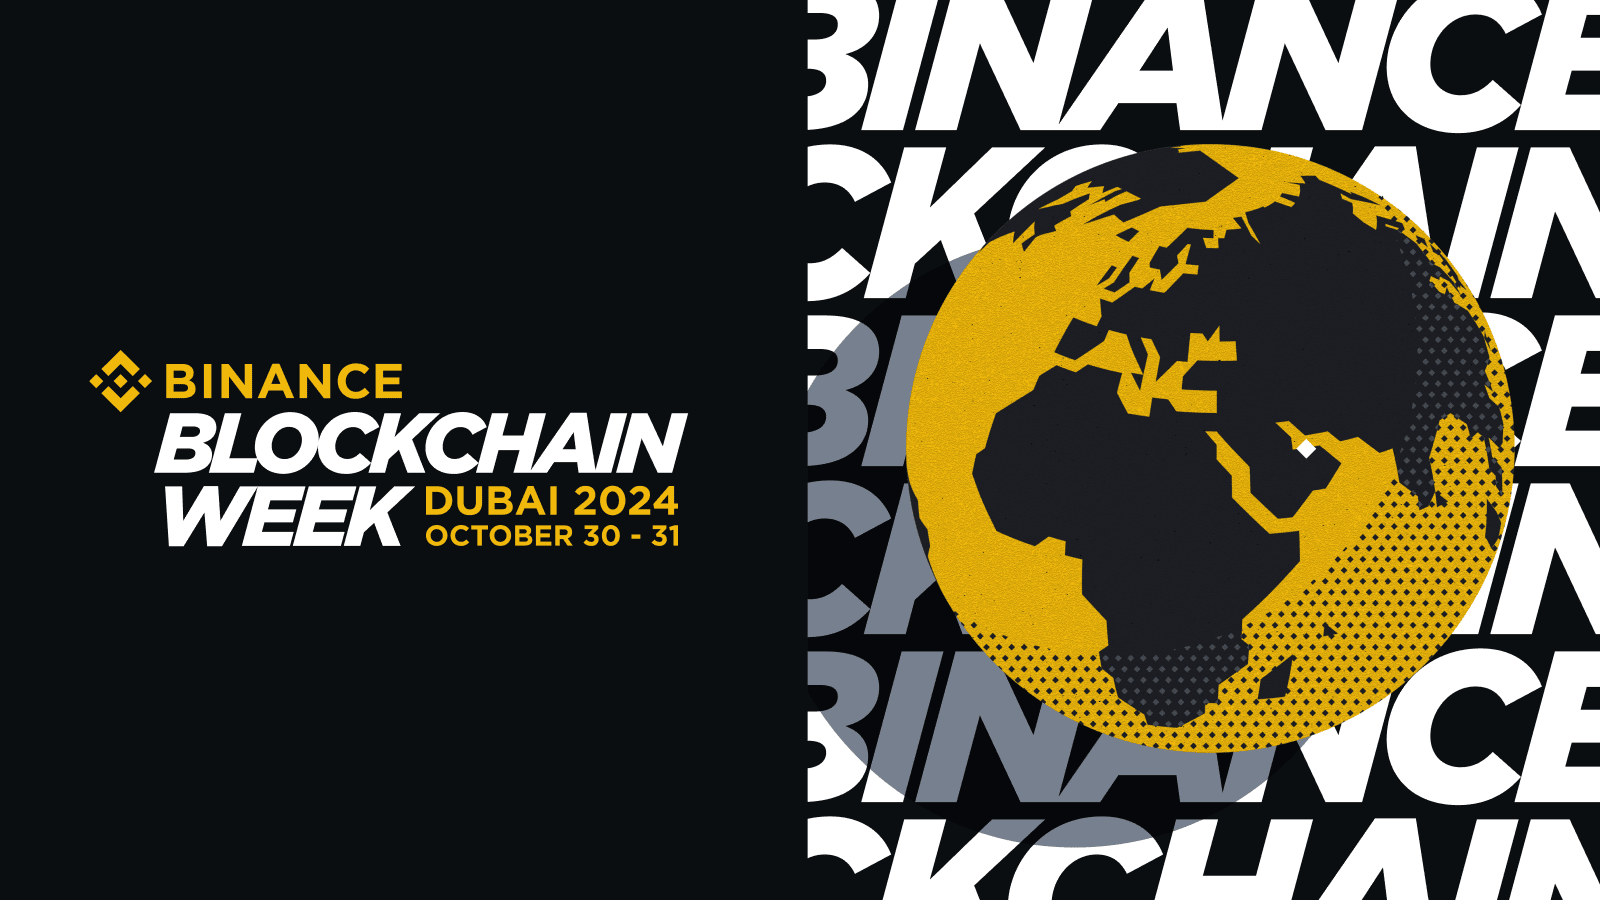 Binance Blockchain Week Dubai 2024: エキサイティングなブロックチェーン体験があなたを待っています